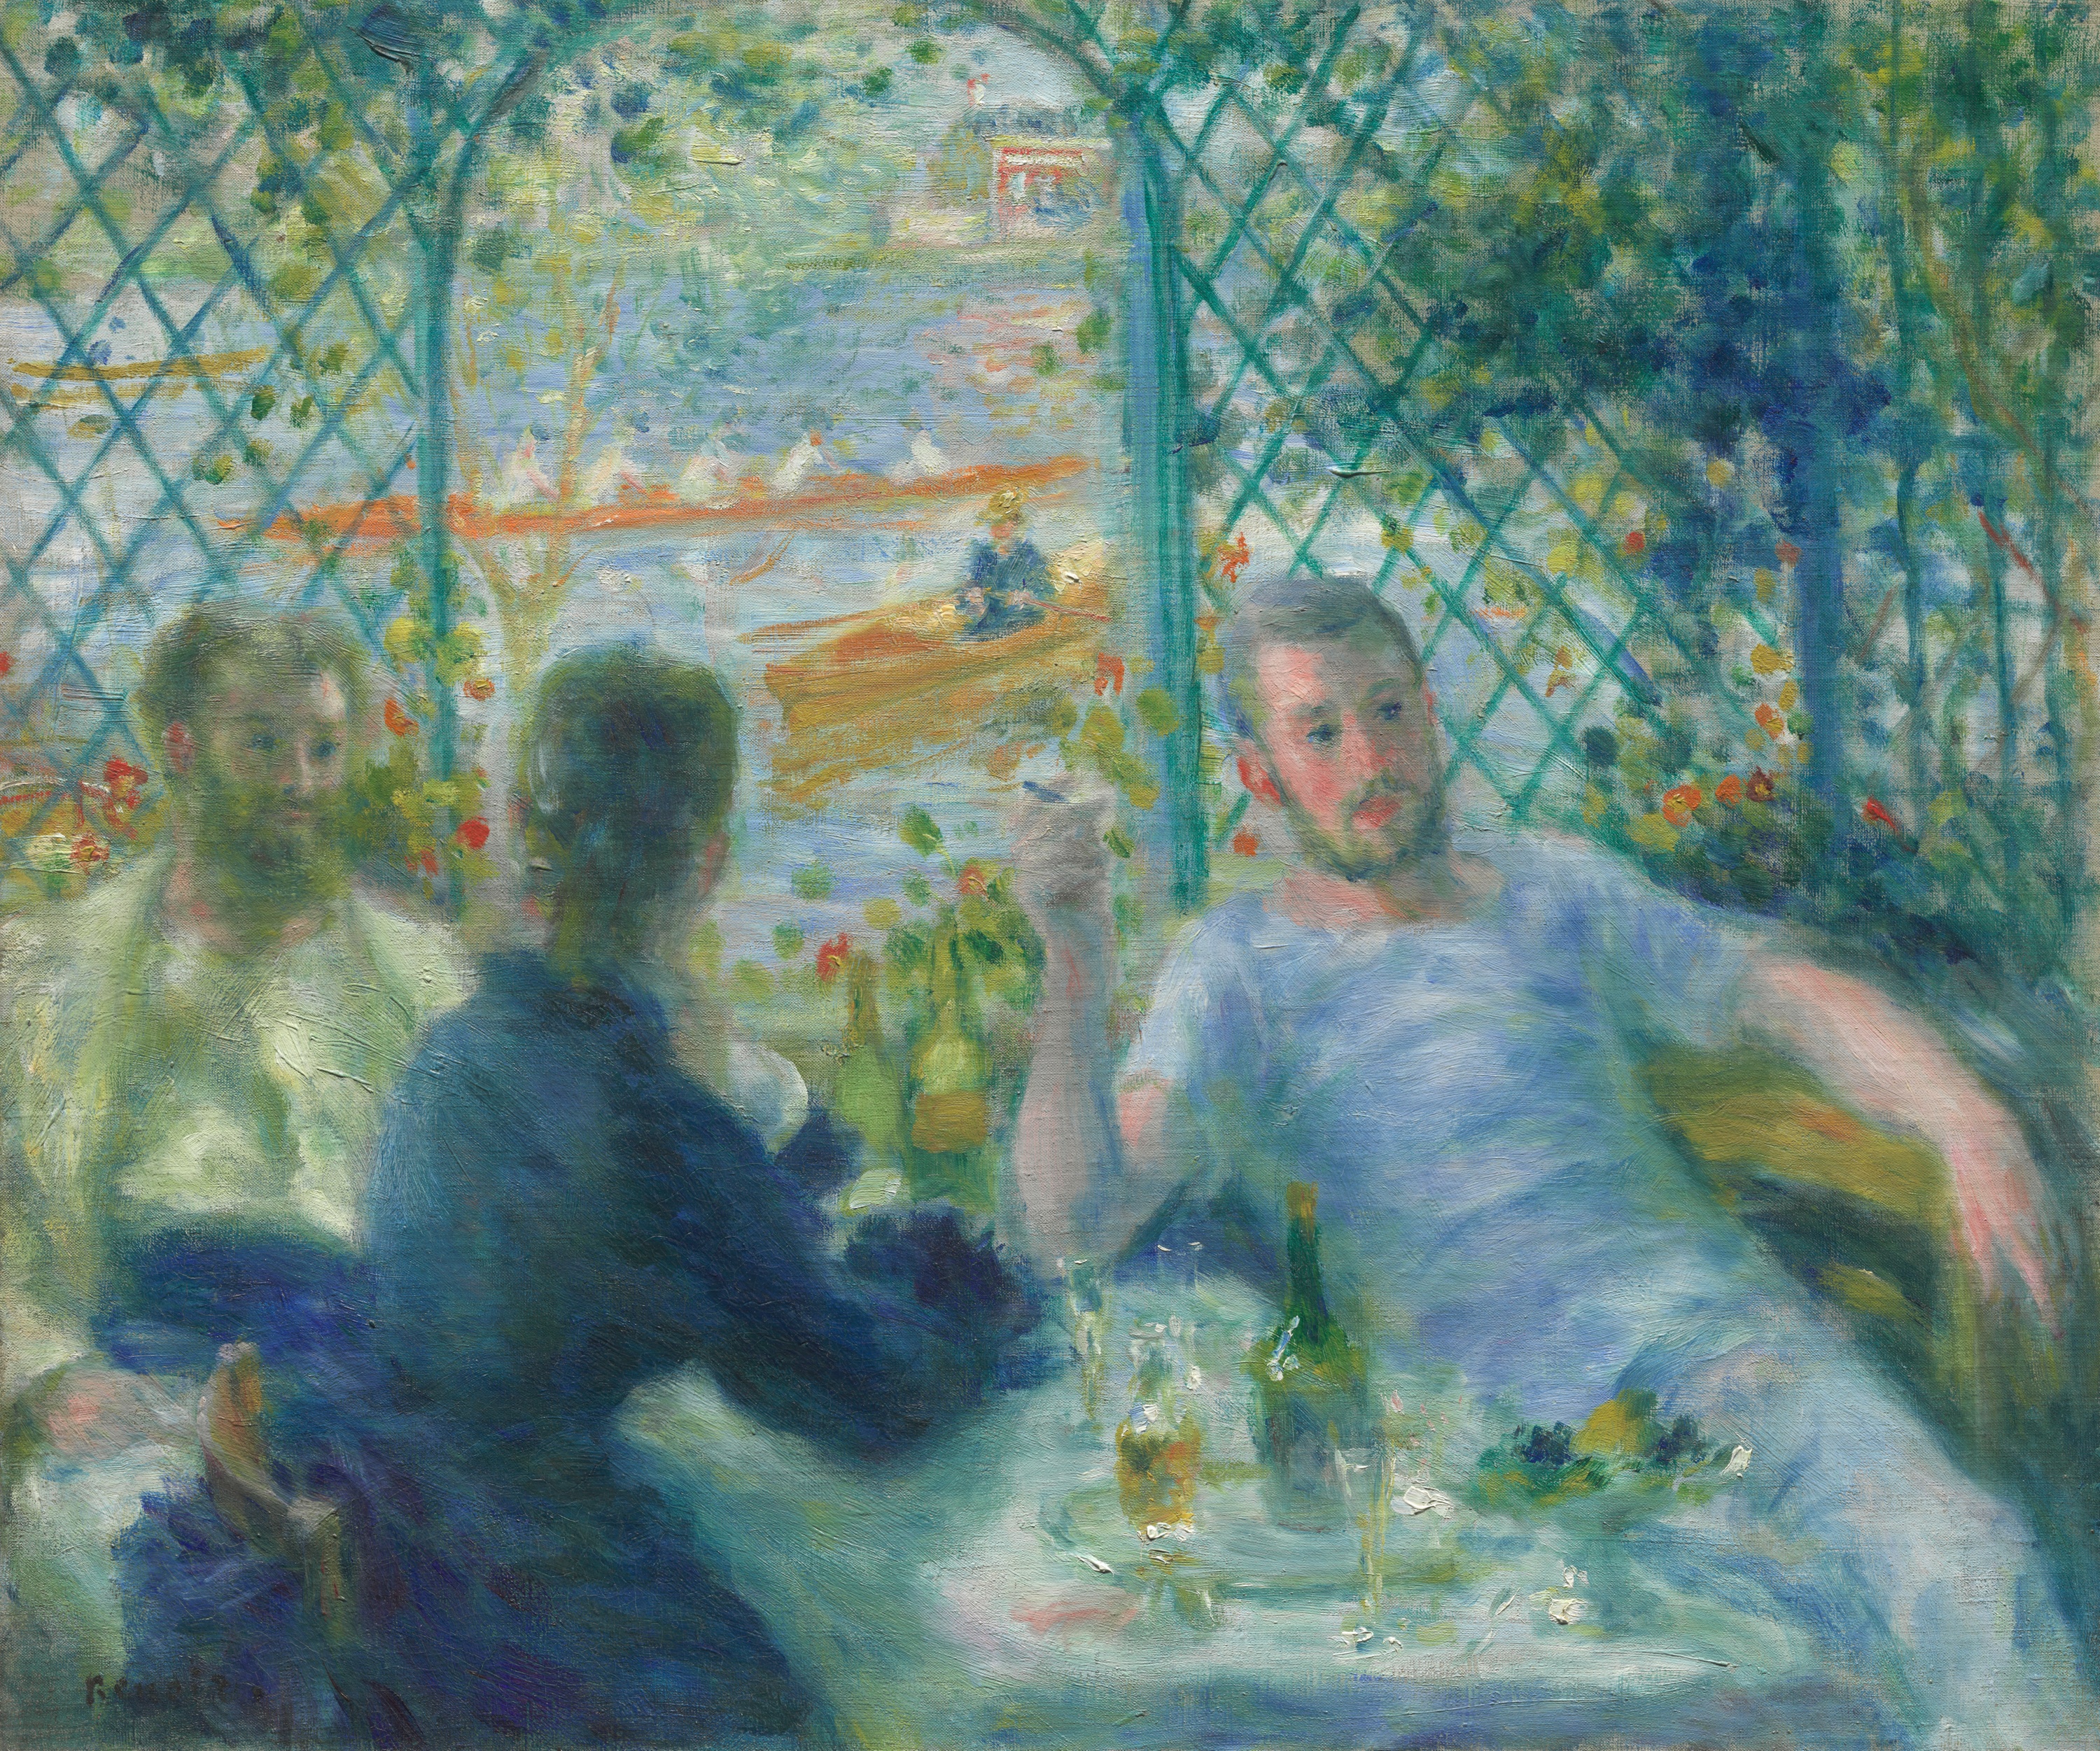 Обед в ресторане Фурнез by Pierre-Auguste Renoir - 1875 - 55 × 65.9 см 